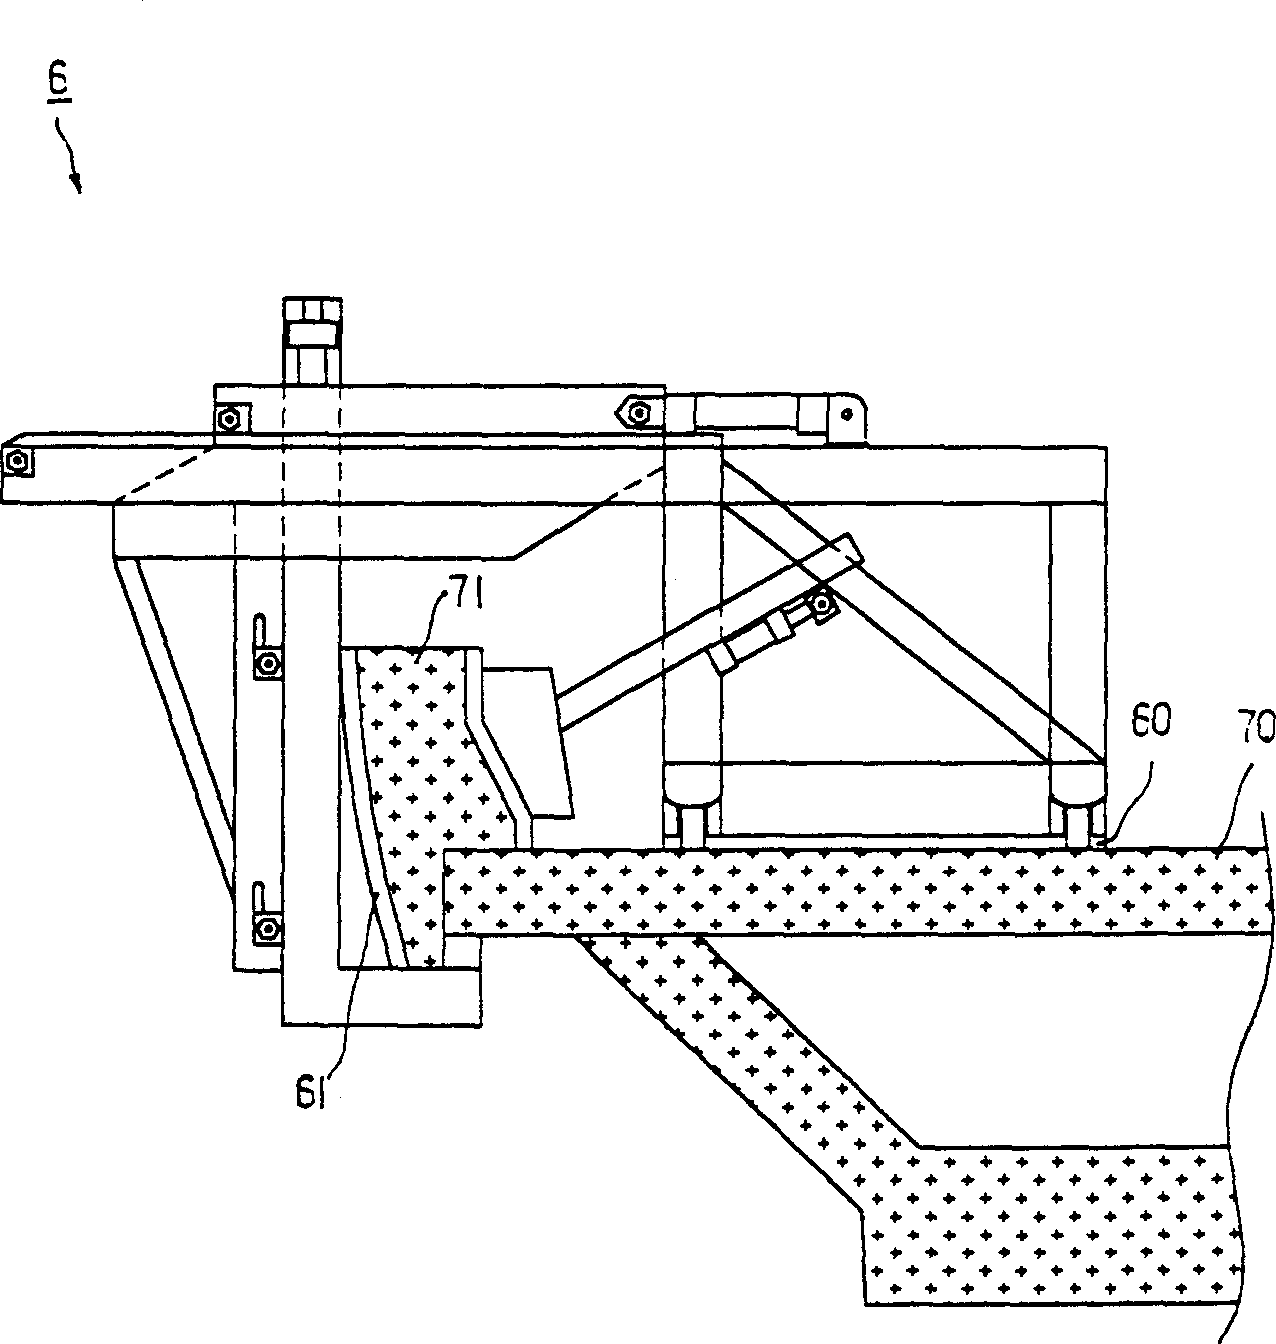 Semiautomatic propelling construction mechanism for bridge parapet